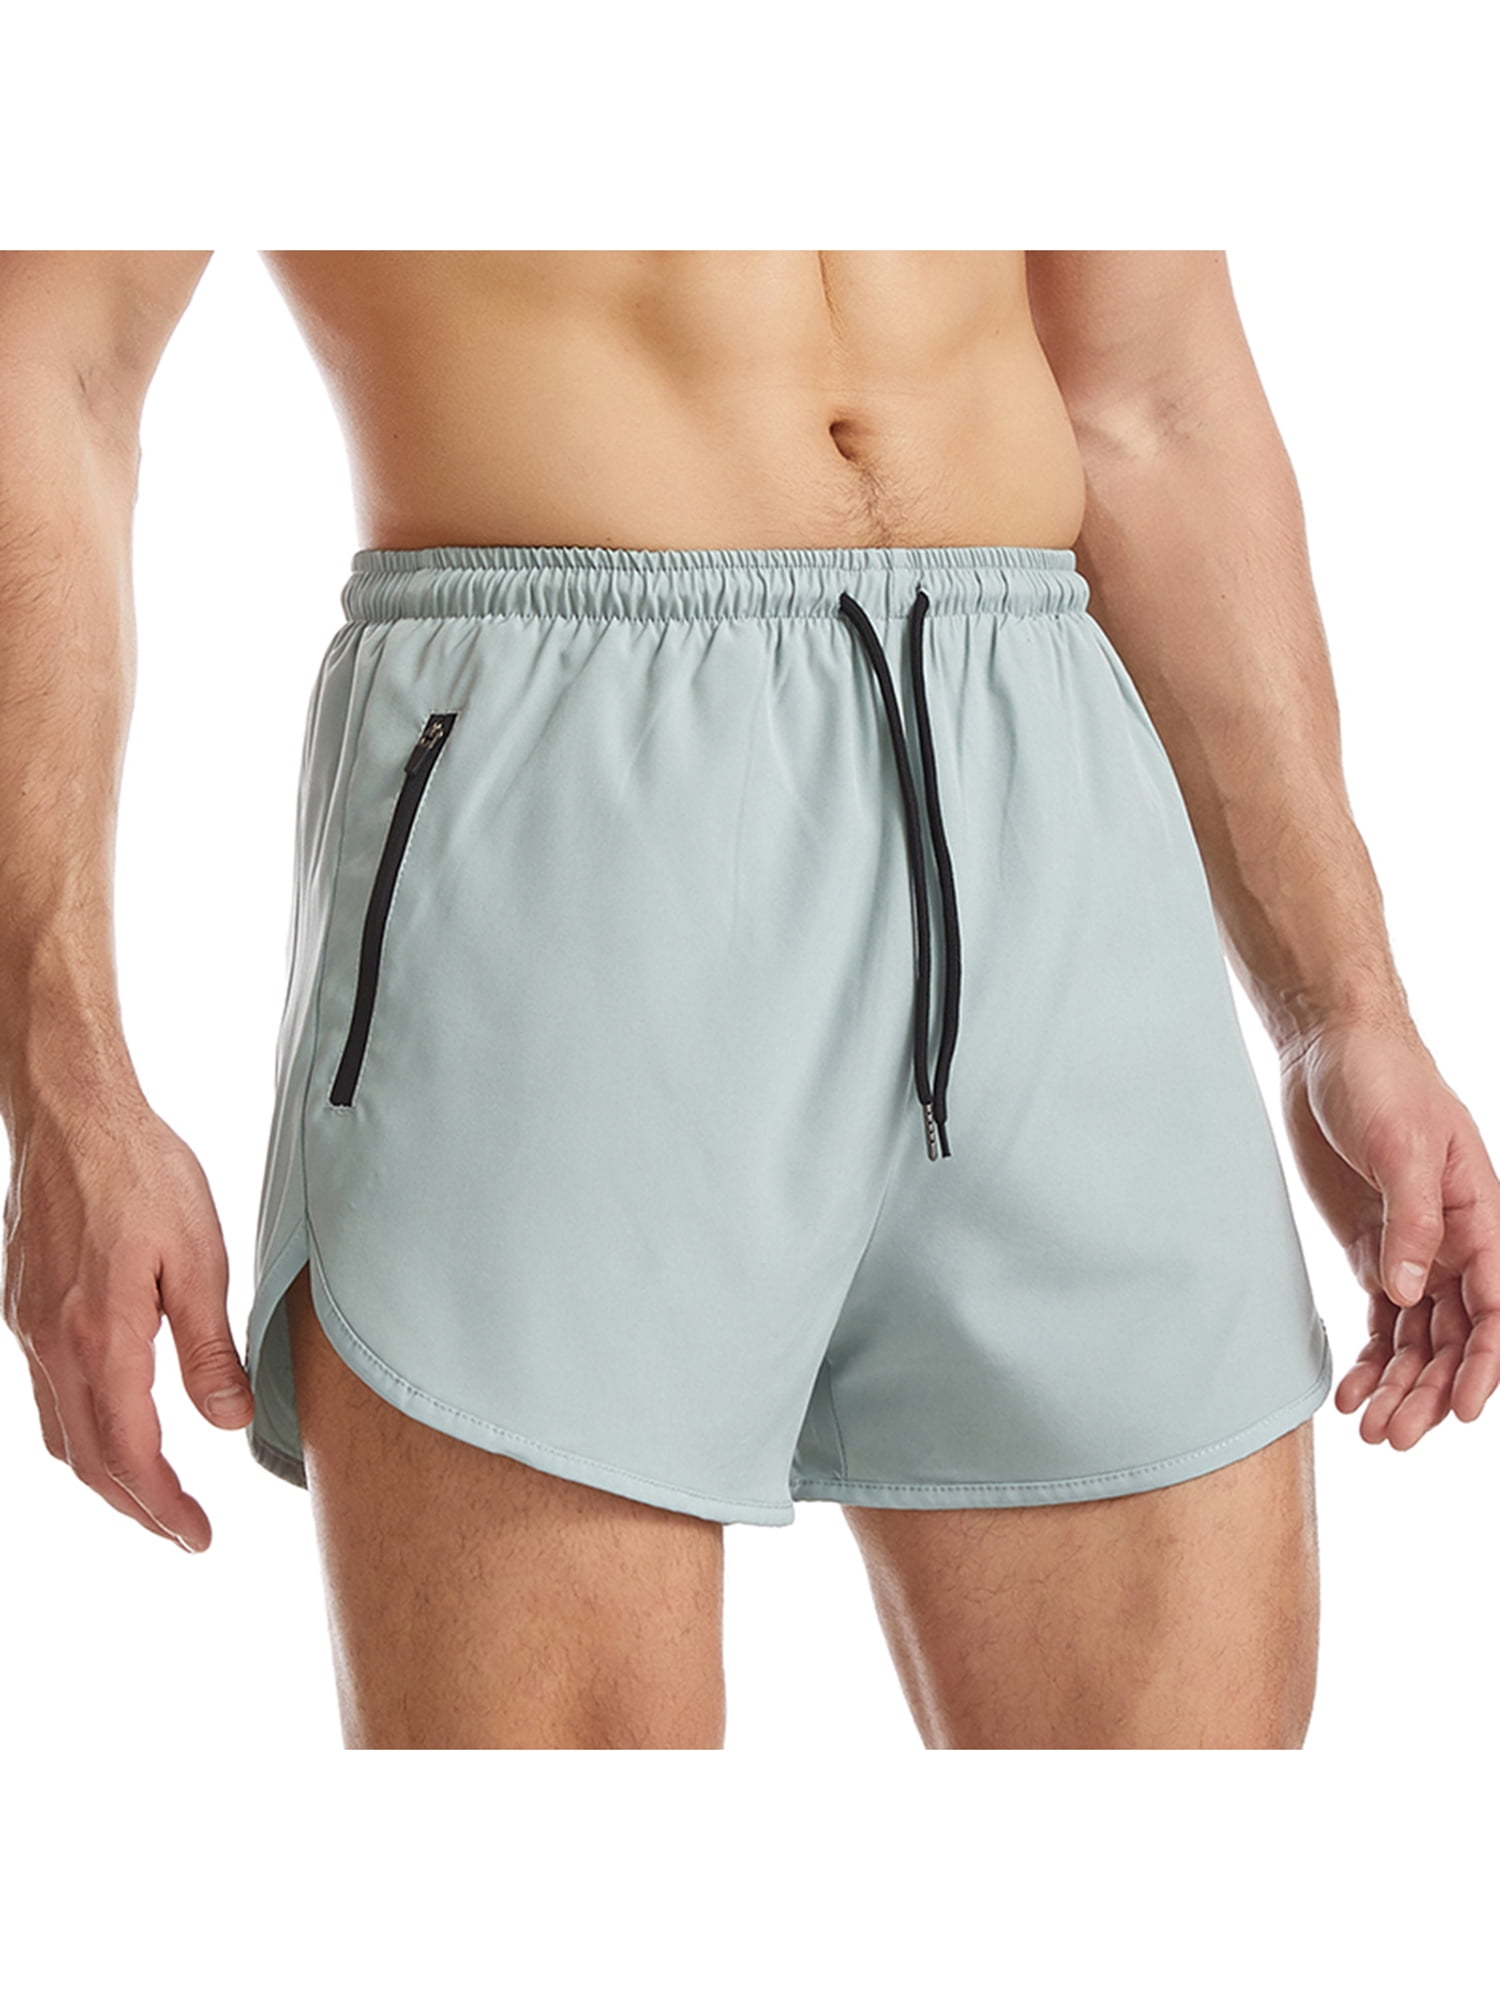 FOCUSNORM Men's Sports Short Pants,Solid Color with Zipper Drawstring  Pocket Casual 